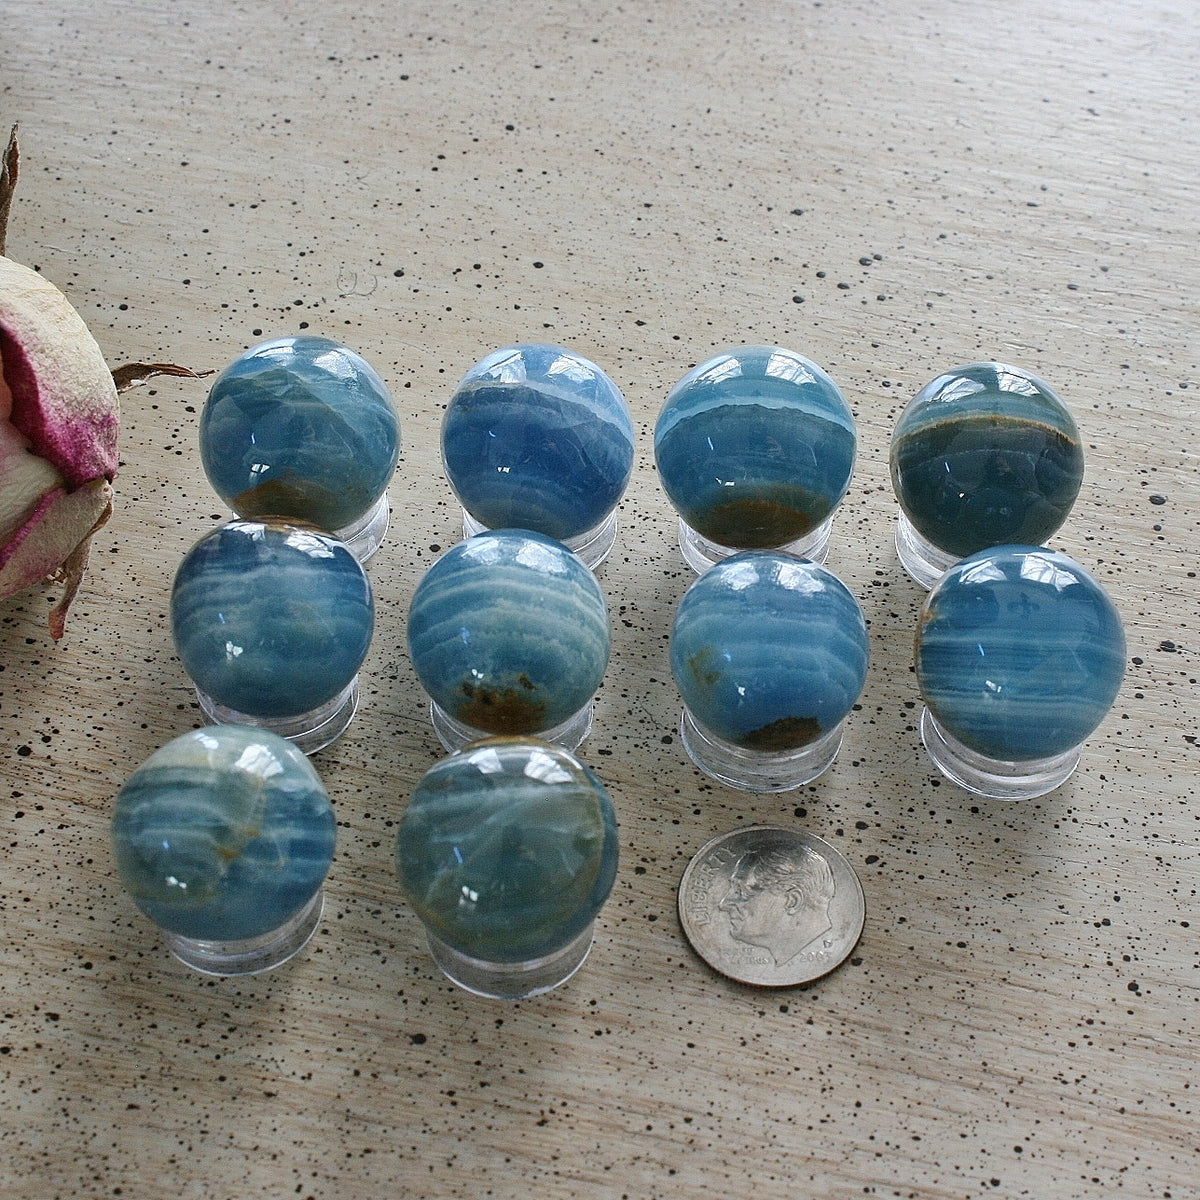 Blue Calcite / Blue Onyx Sphere from Argentina, also called Lemurian Aquatine Calcite, SMSP3